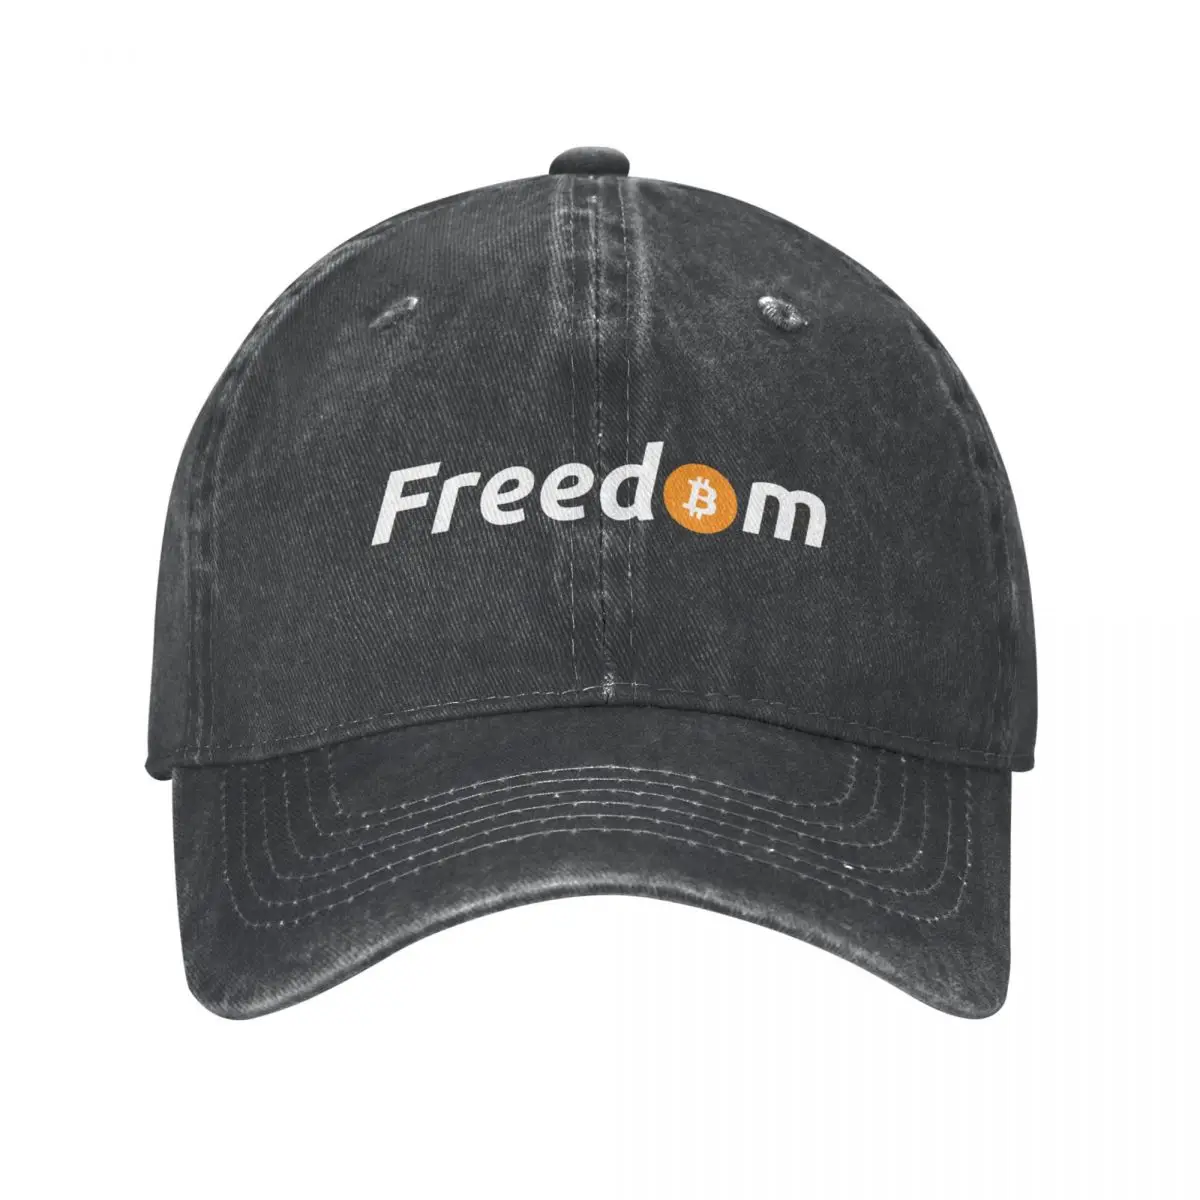 

Bitcoin Freedom Denim Baseball Cap Adjustable Hats Women Men Crypto Btc Blockchain Cap Spring Autumn Classic Casquette Gorras